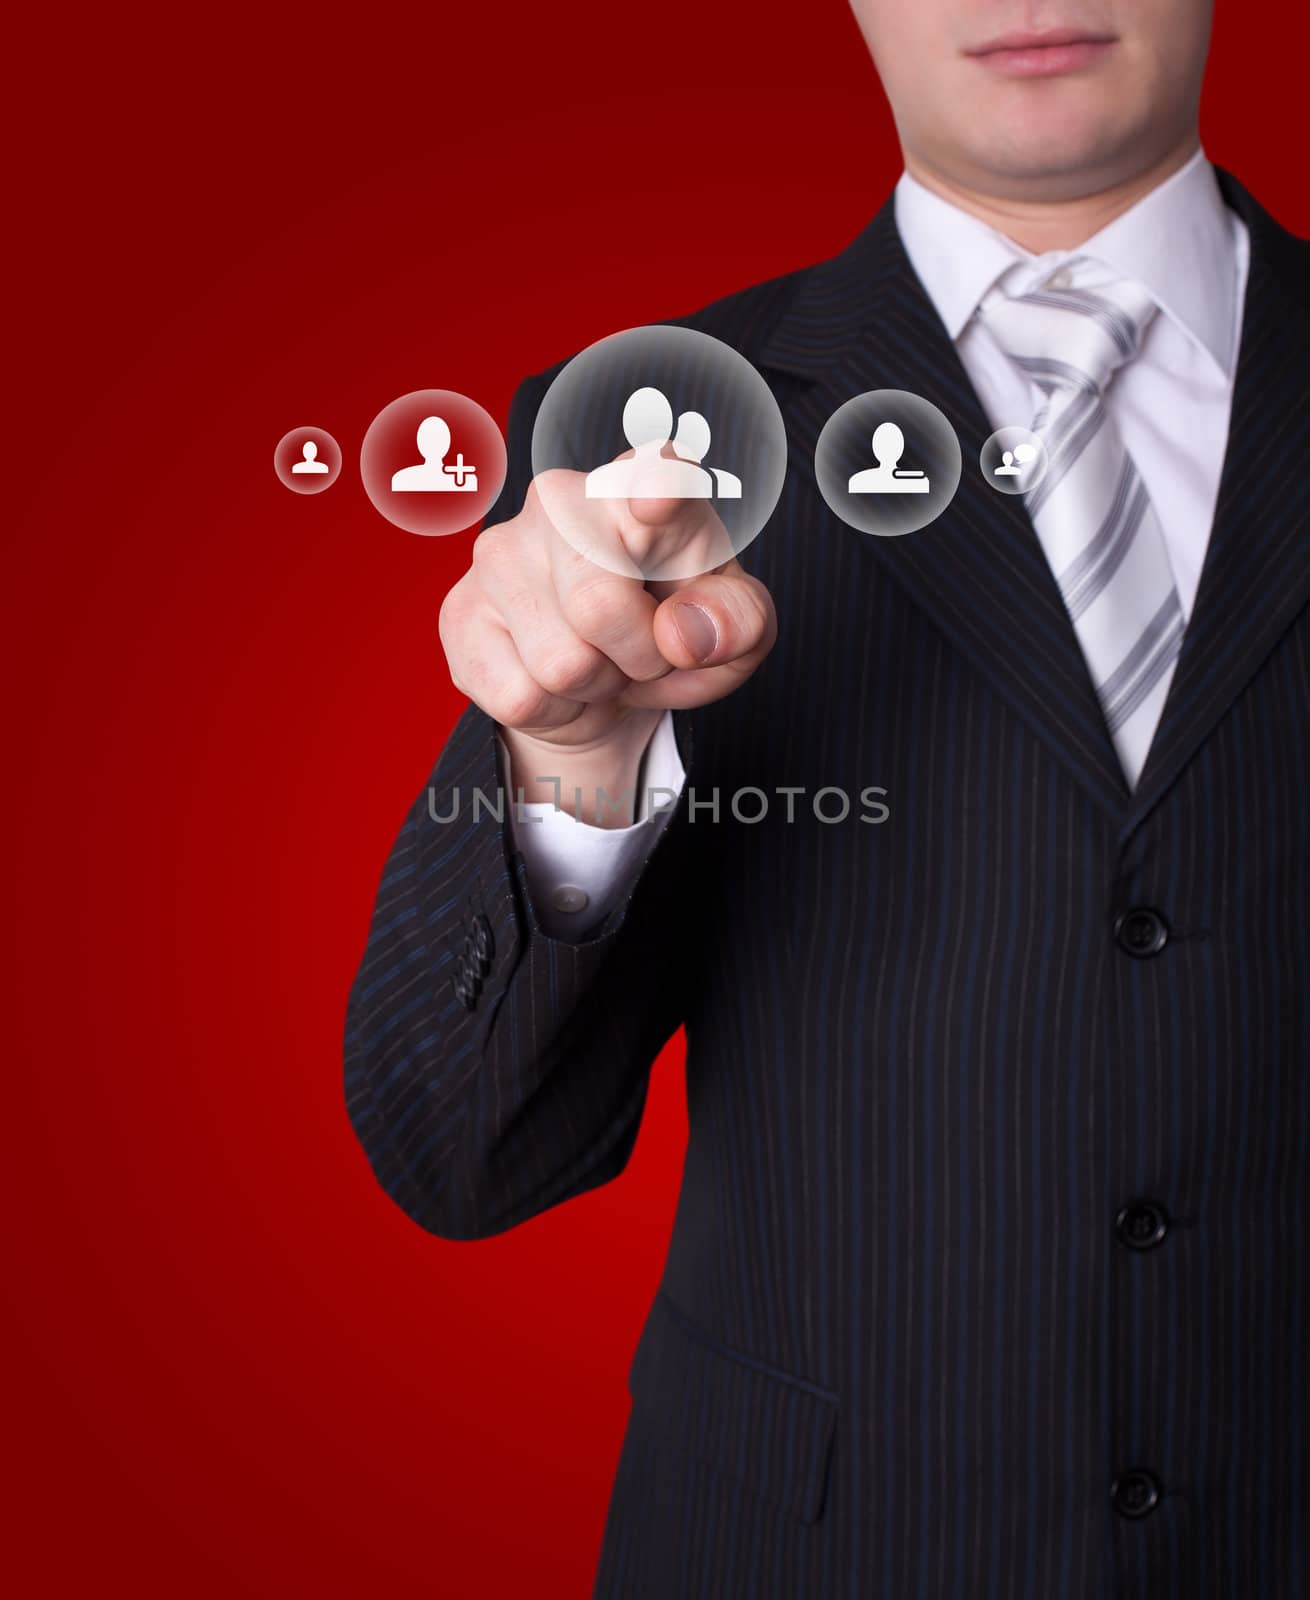 Man hand pressing social network button